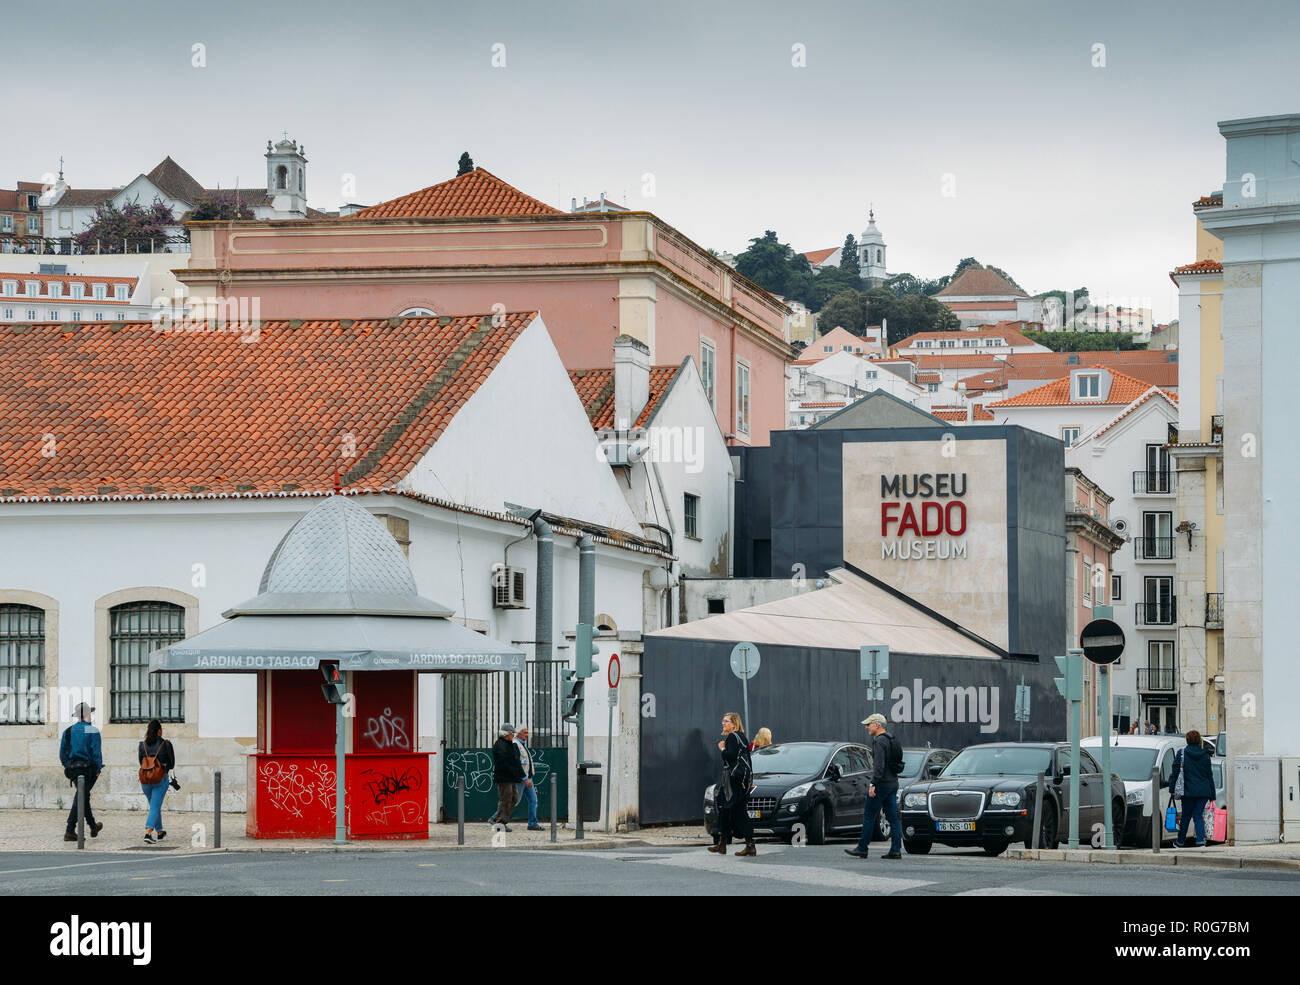 Lisbon, Portugal - Nov 3, 2018: Facade of Fado museum building in Alfama, Lisbon Portugal Stock Photo